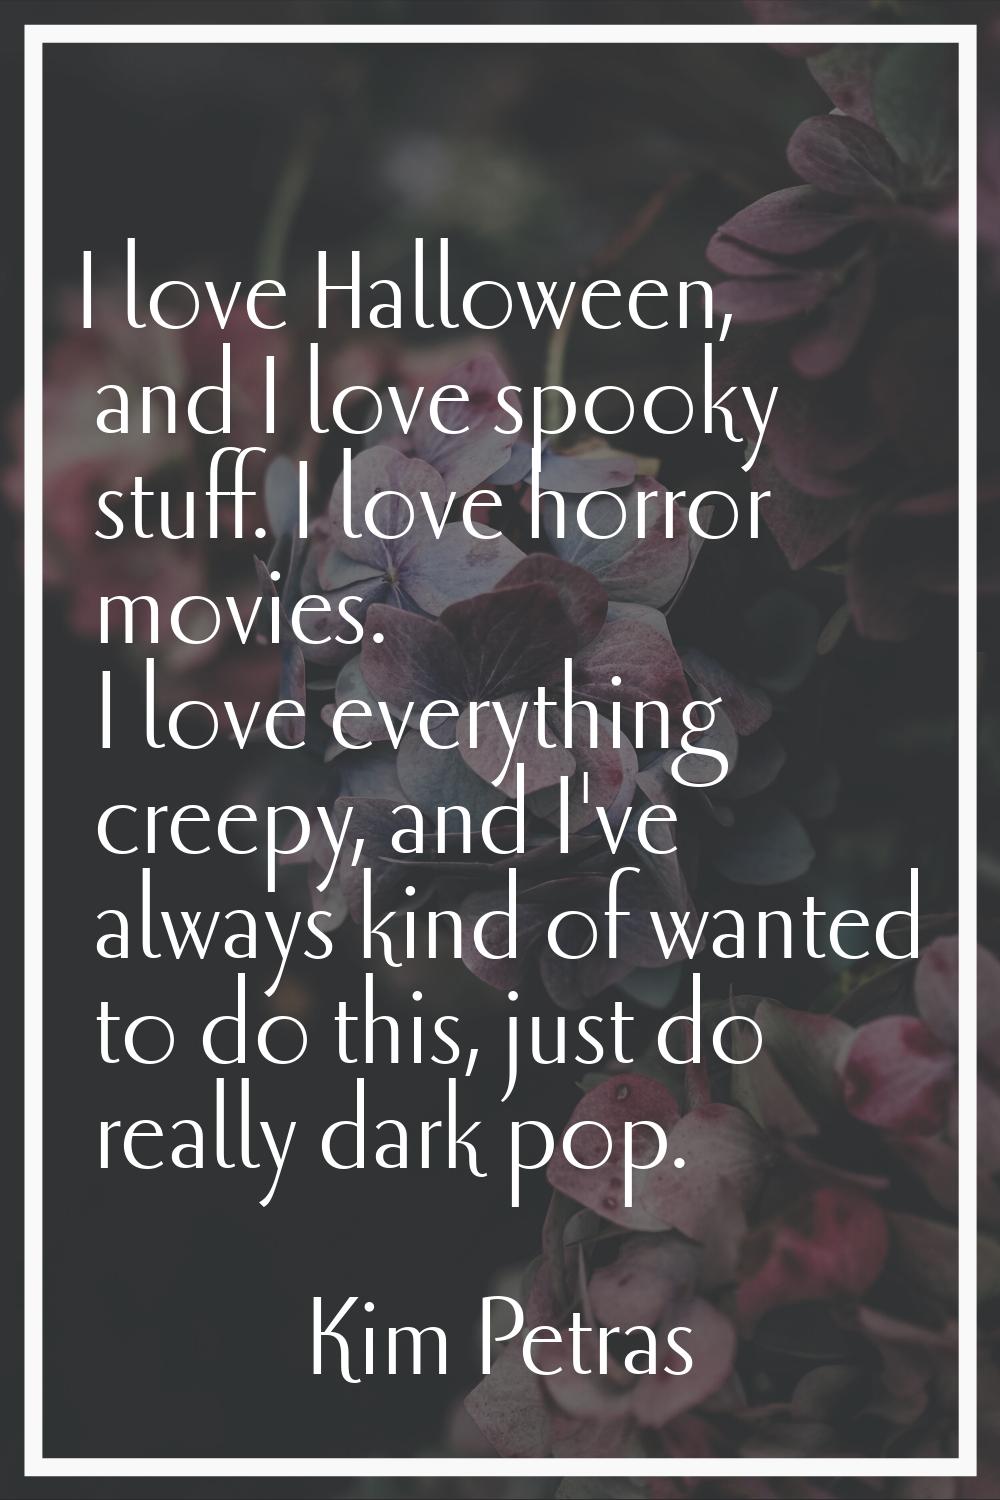 I love Halloween, and I love spooky stuff. I love horror movies. I love everything creepy, and I've